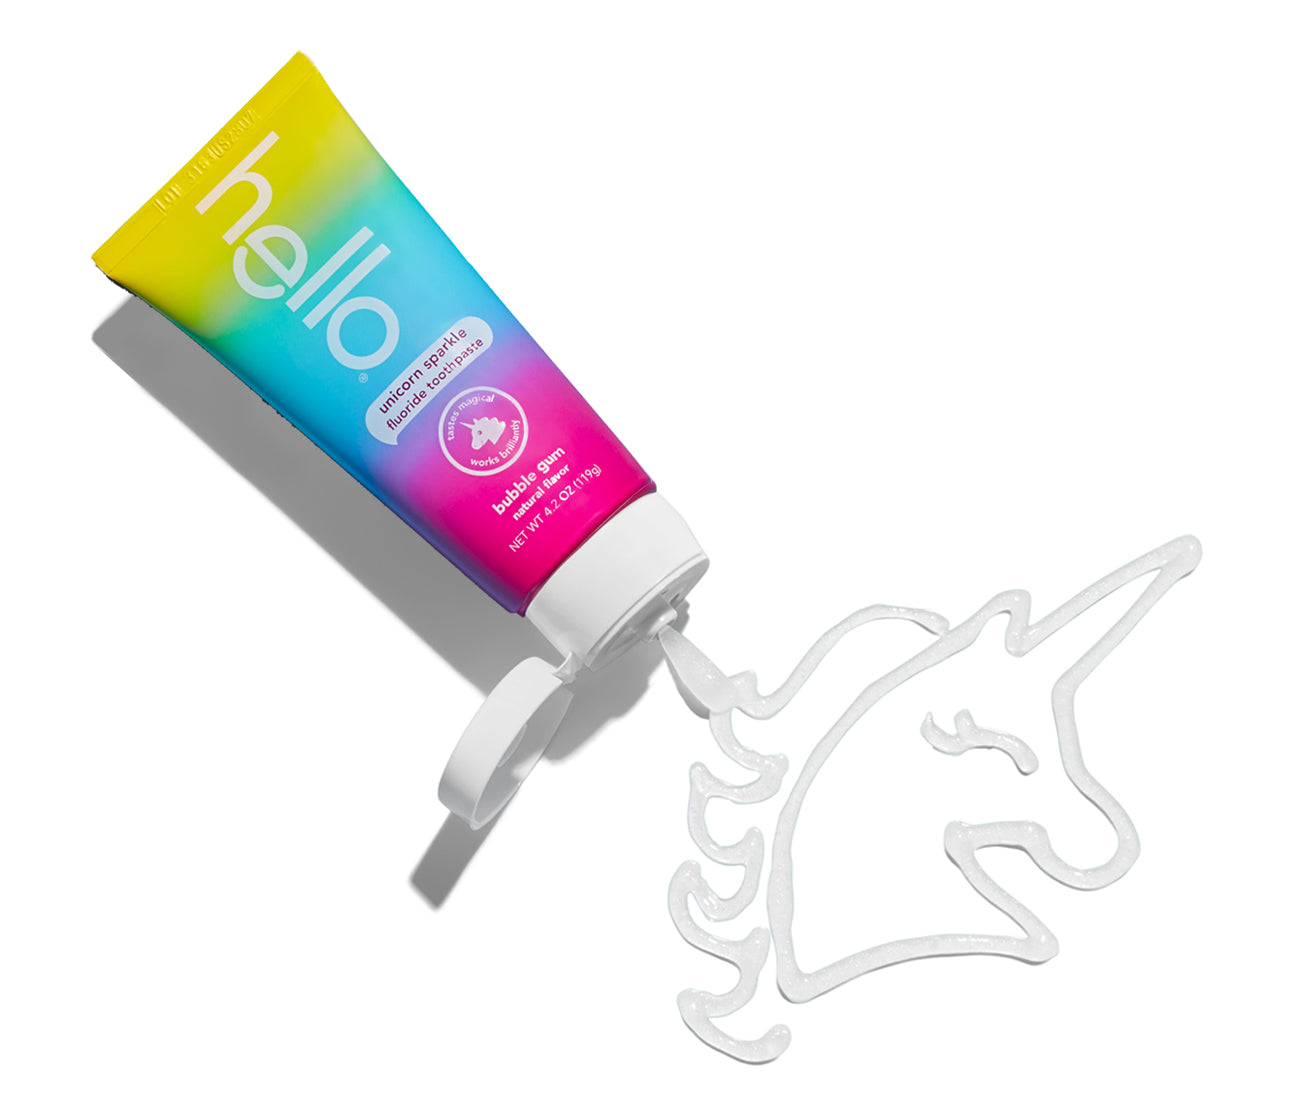 Toothpaste and unicorn image